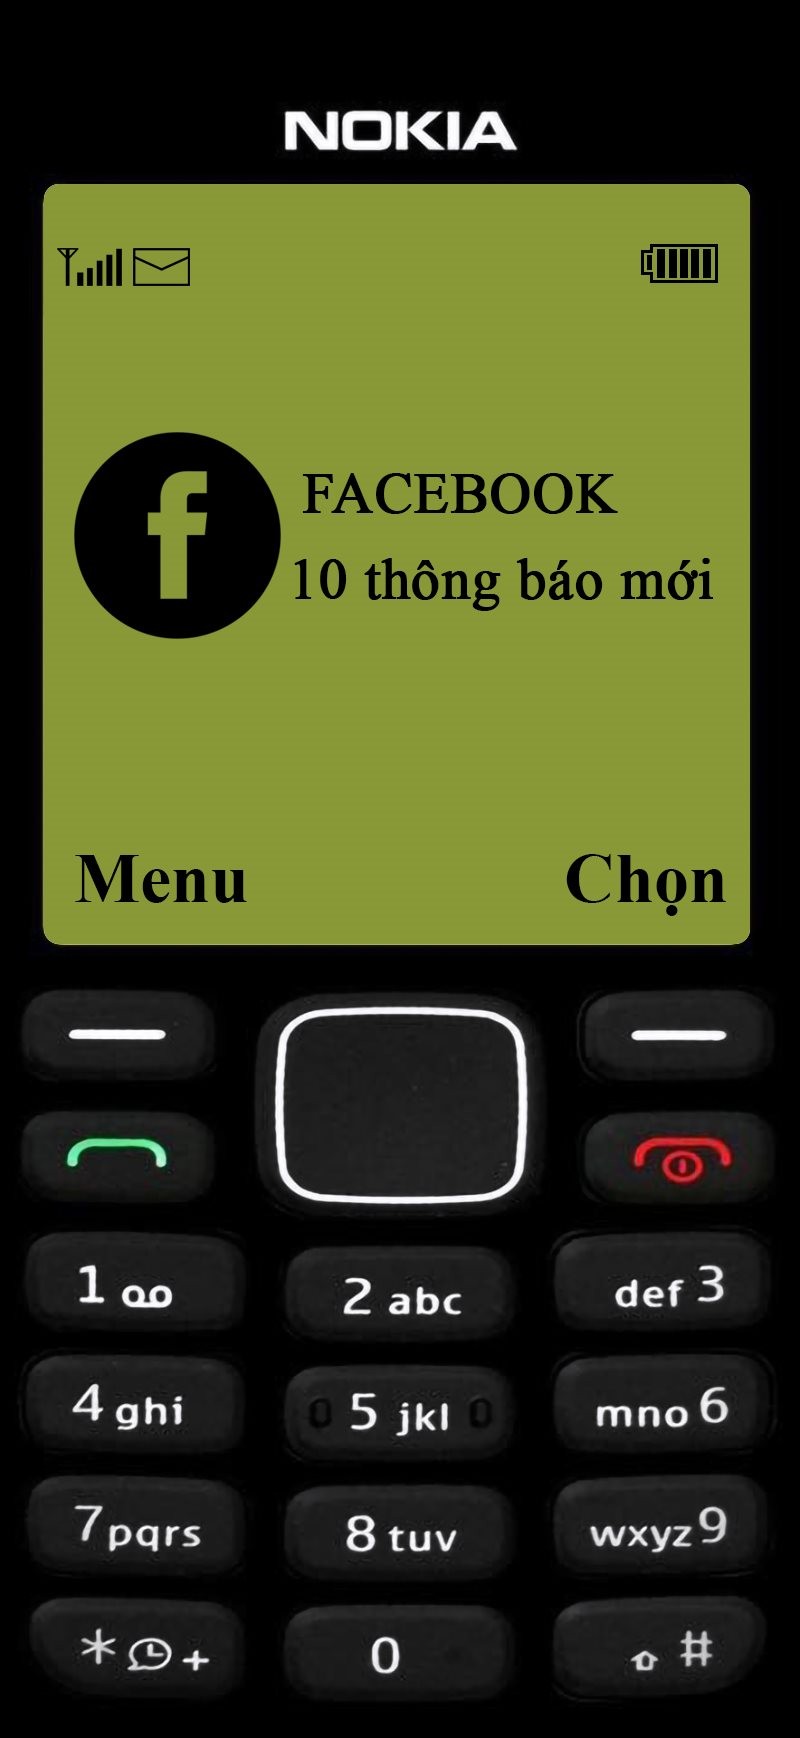 Tong hop hinh nen “cai trang” smartphone thanh Nokia 1280-Hinh-5